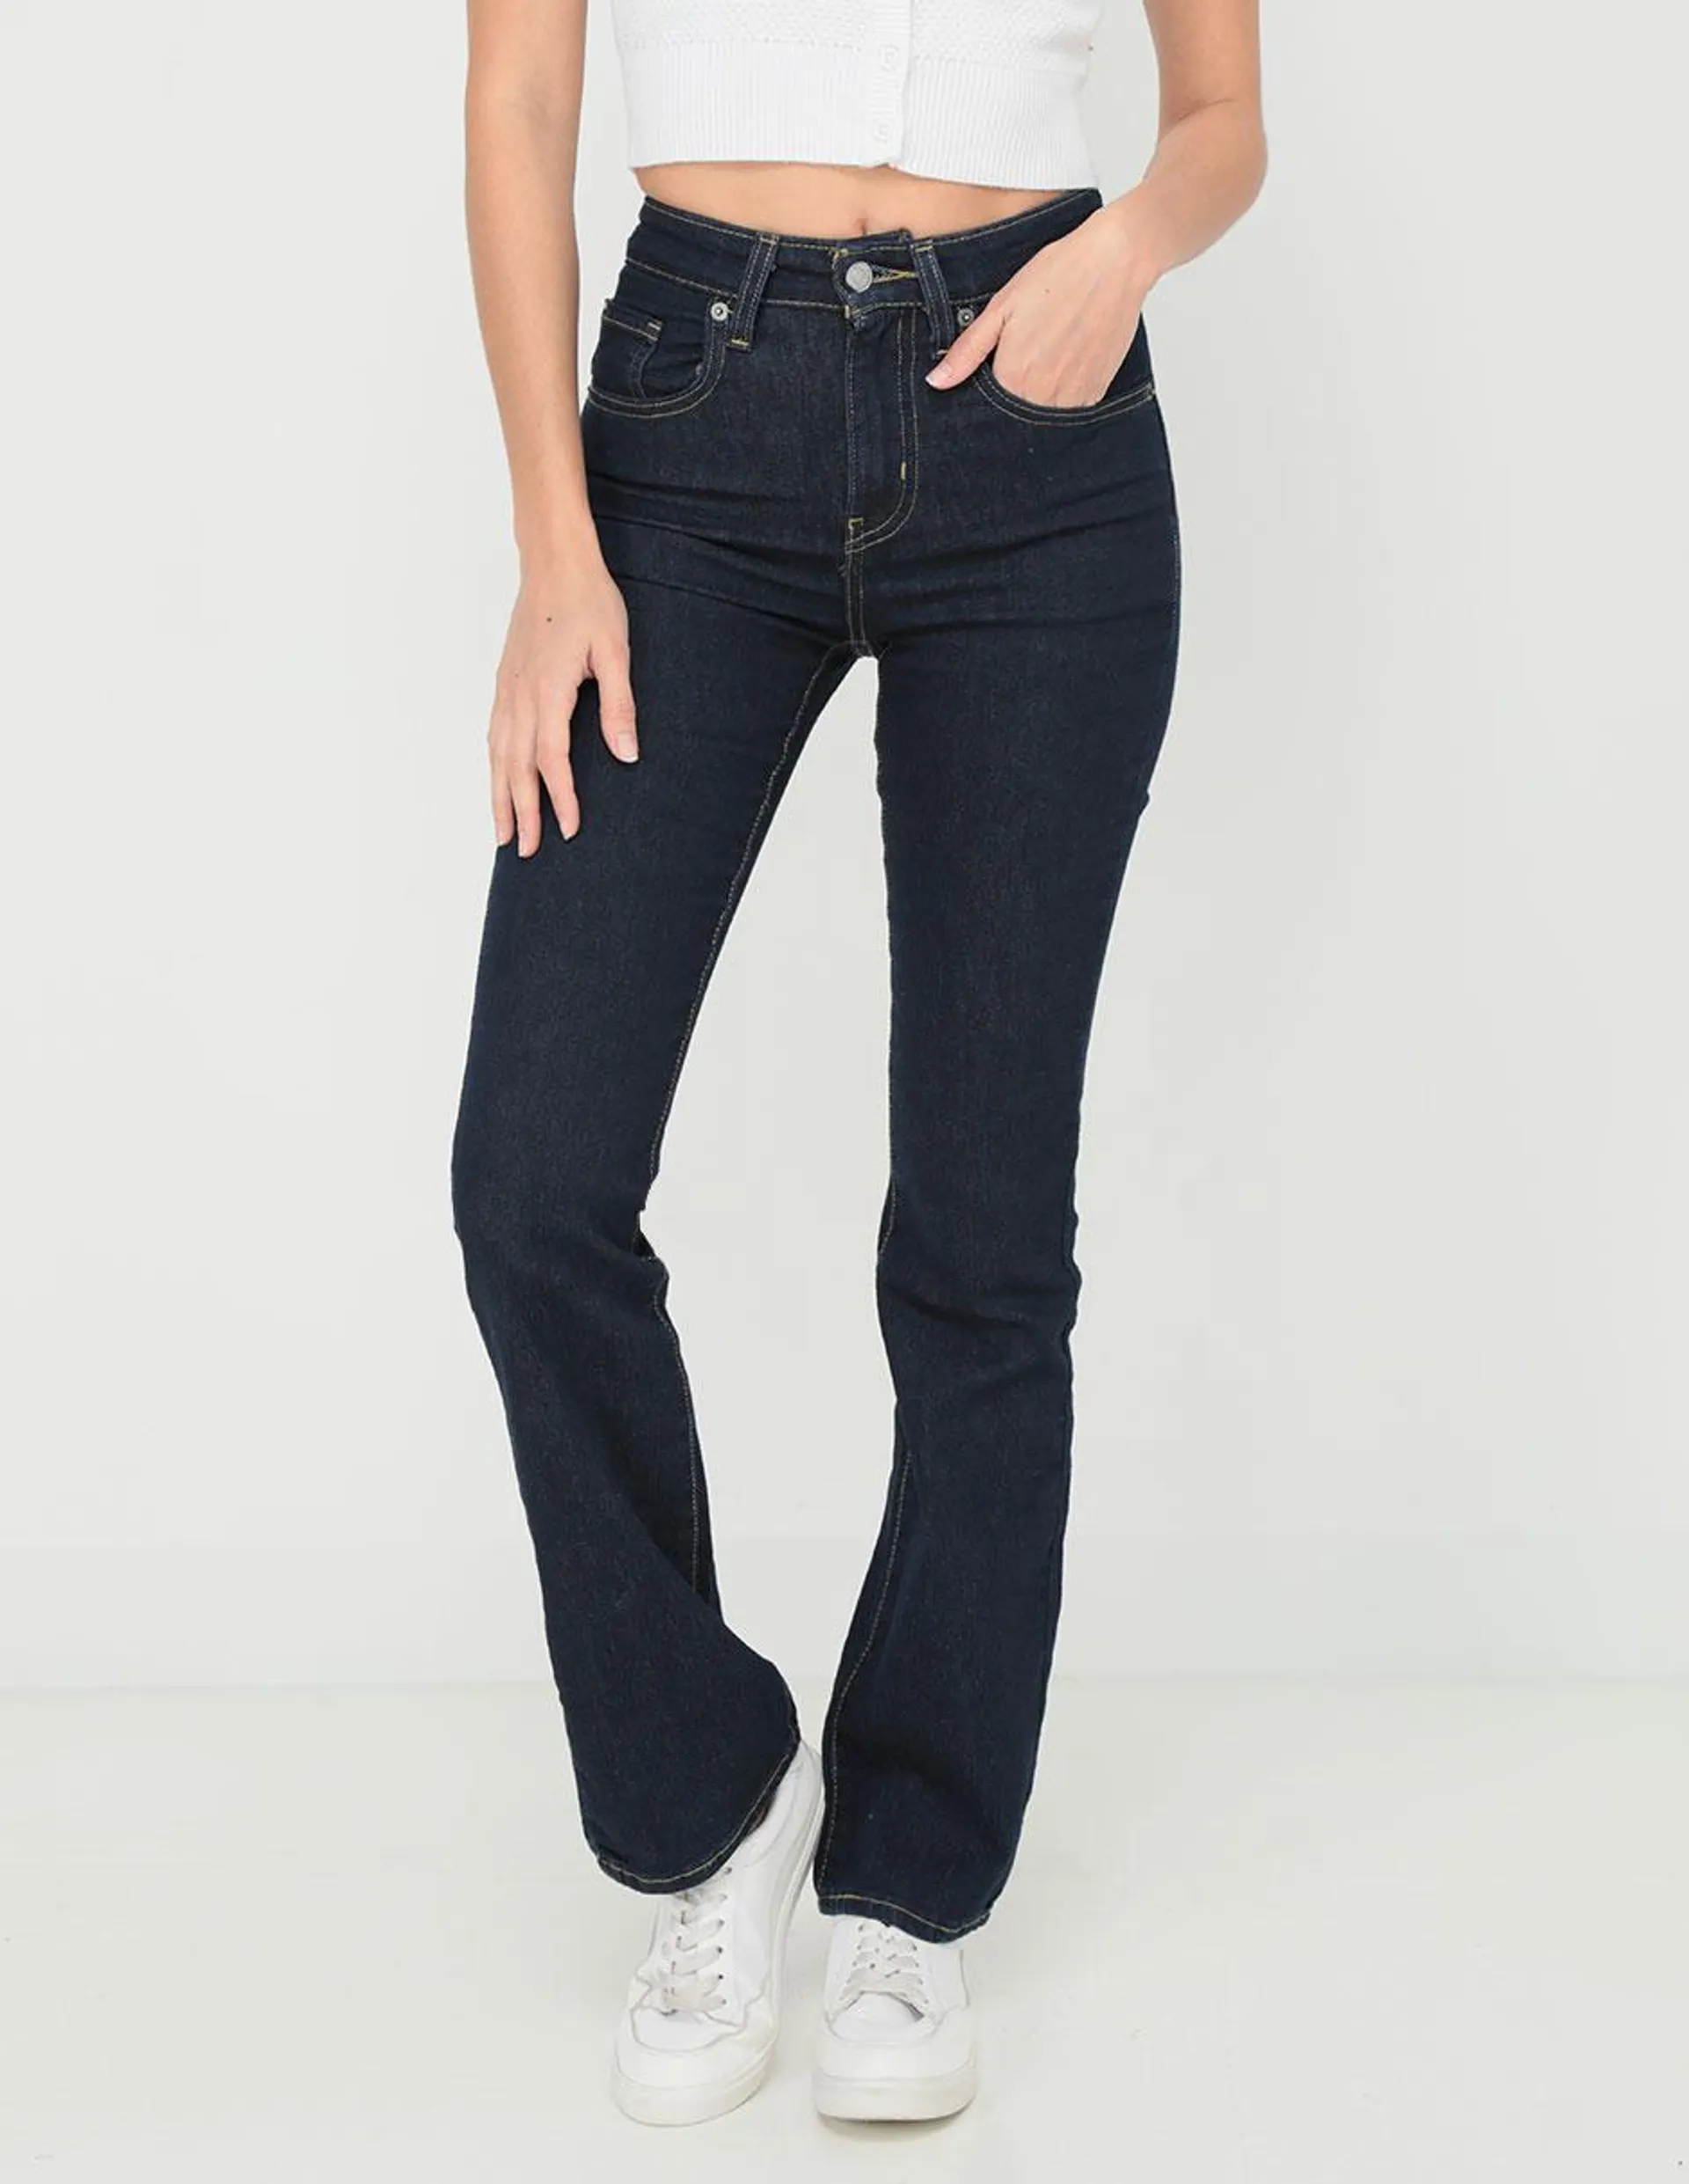 Jeans bota Levi's High Rise Bootcut corte cintura alta para mujer